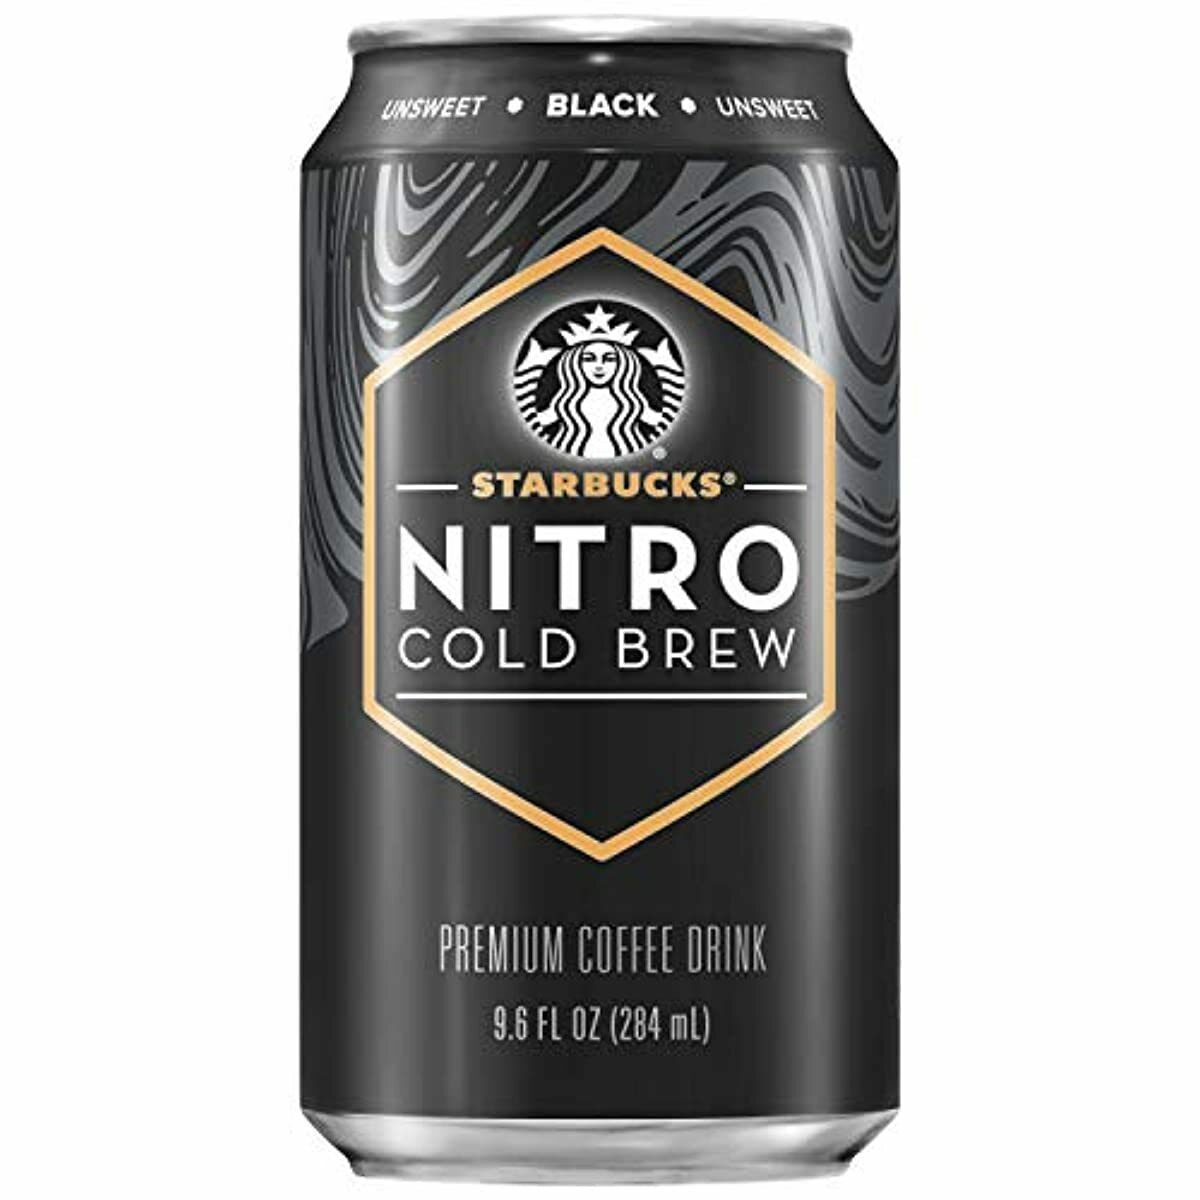 Starbucks Nitro Cold Brew, Black Unsweetened, 9.6 Fl oz Can (8 Pack)